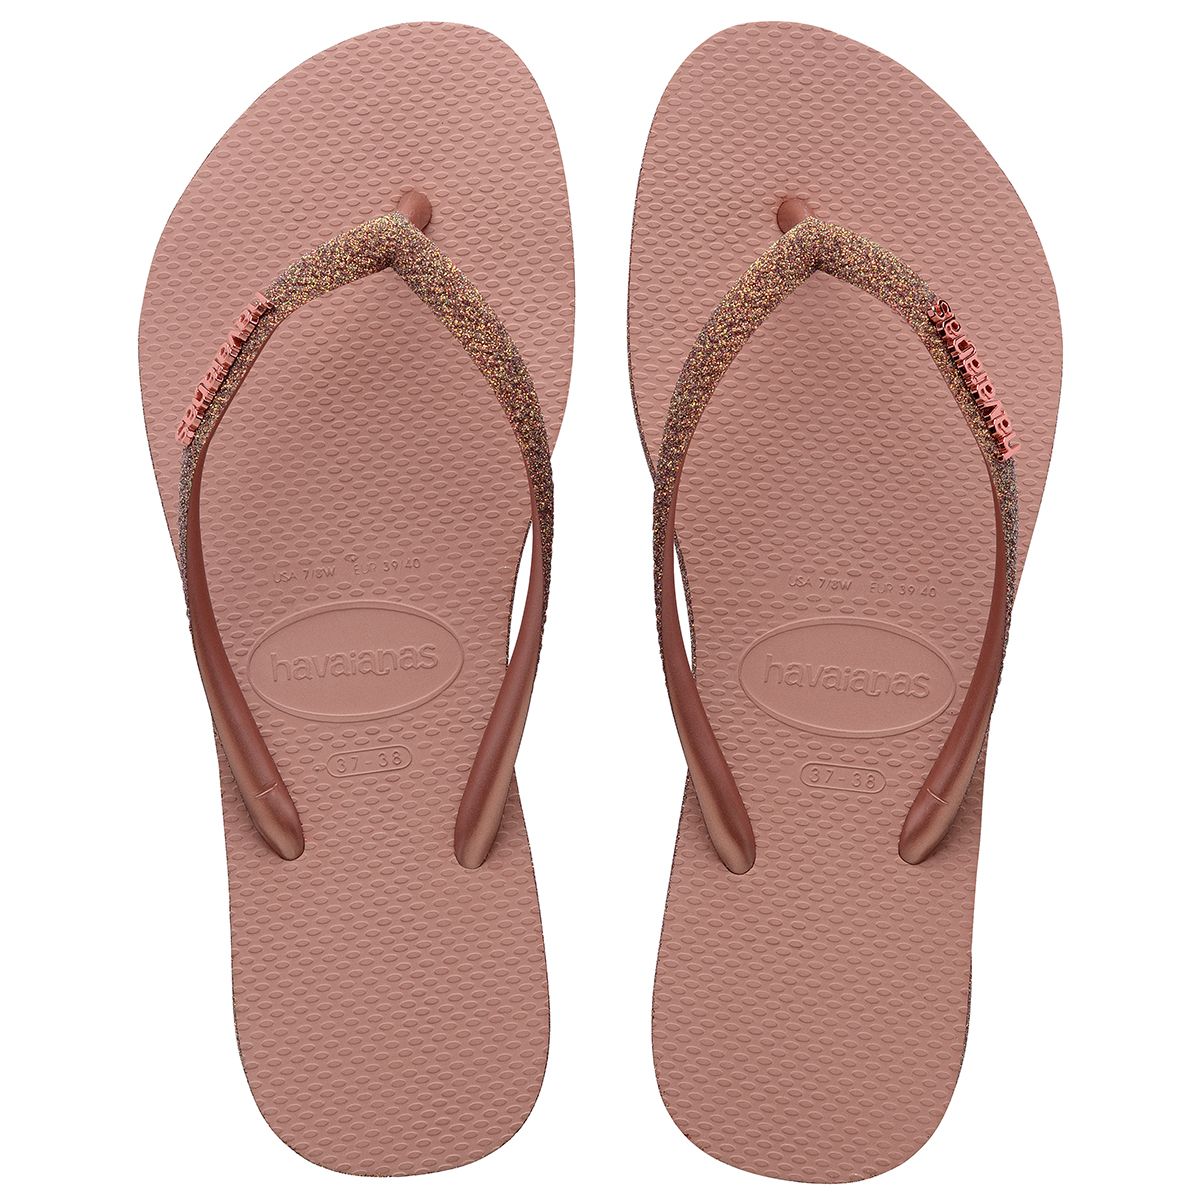 Havaianas Slim Sparkle 2 Womens Sandal 3544-Crocus Rose 11